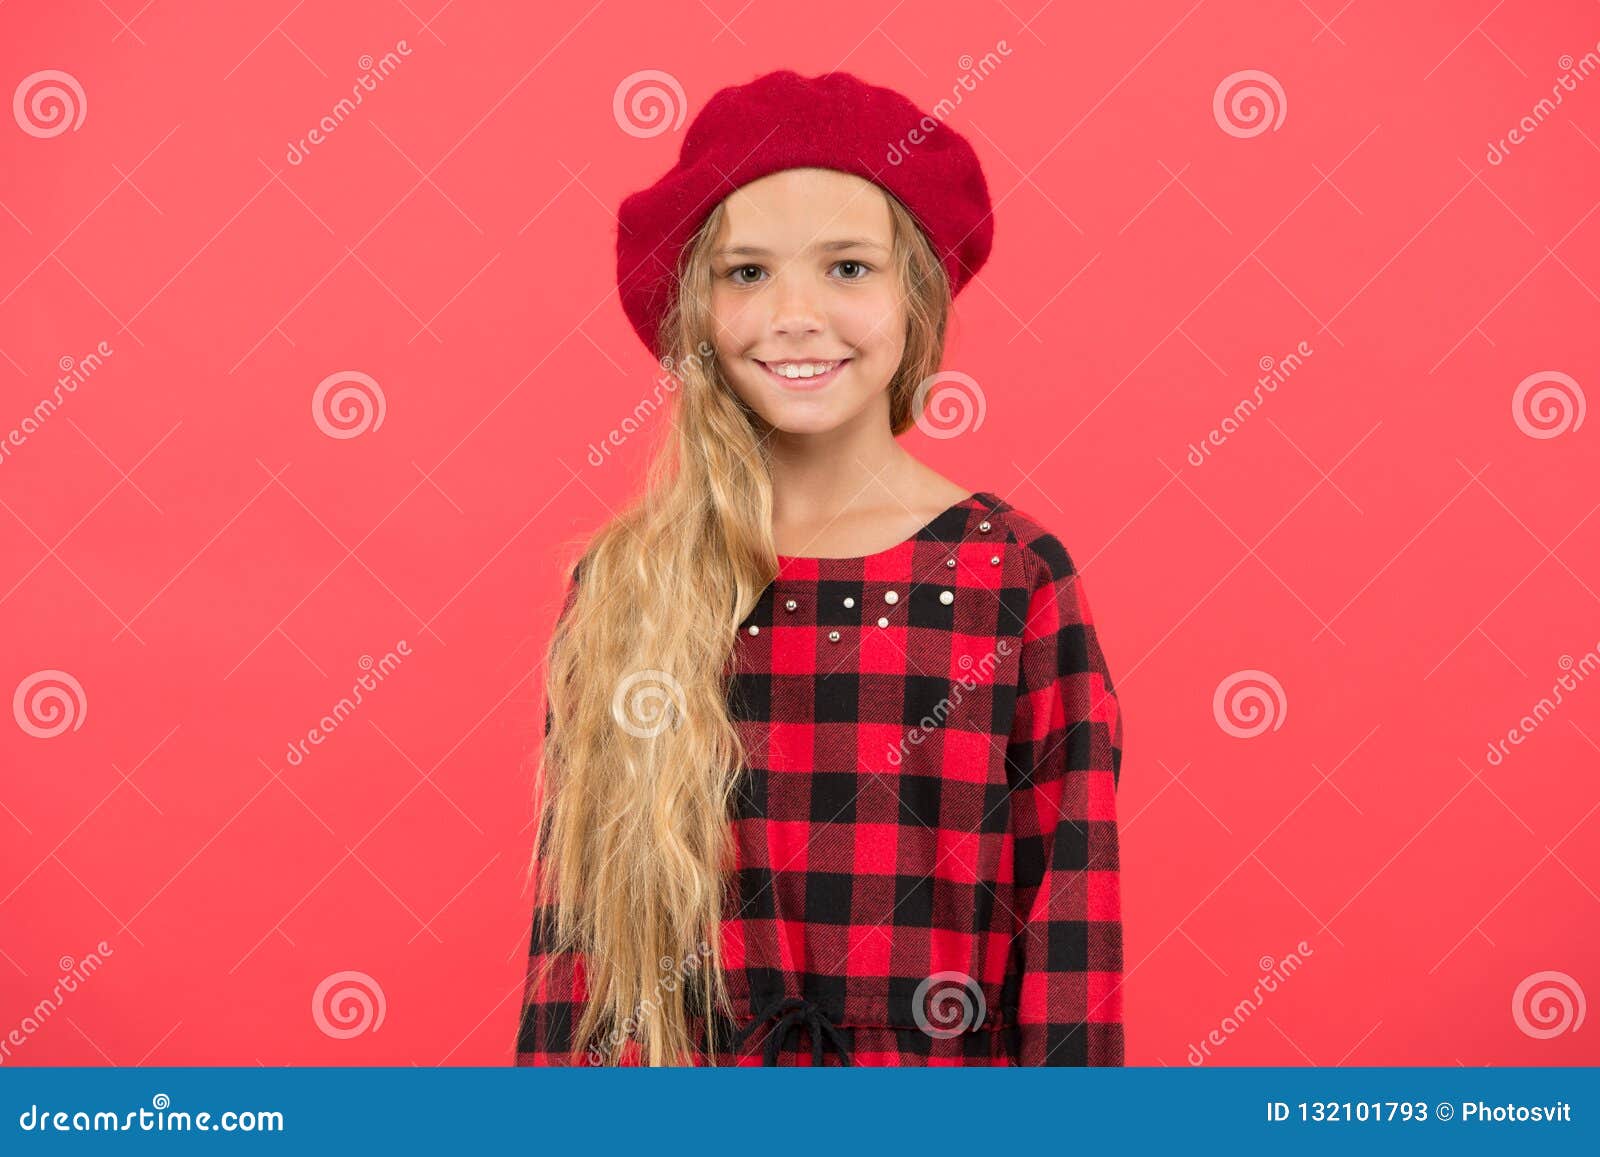 Niña con sombrero de estilo francés niña feliz con cabello largo y rizado  en boina verano